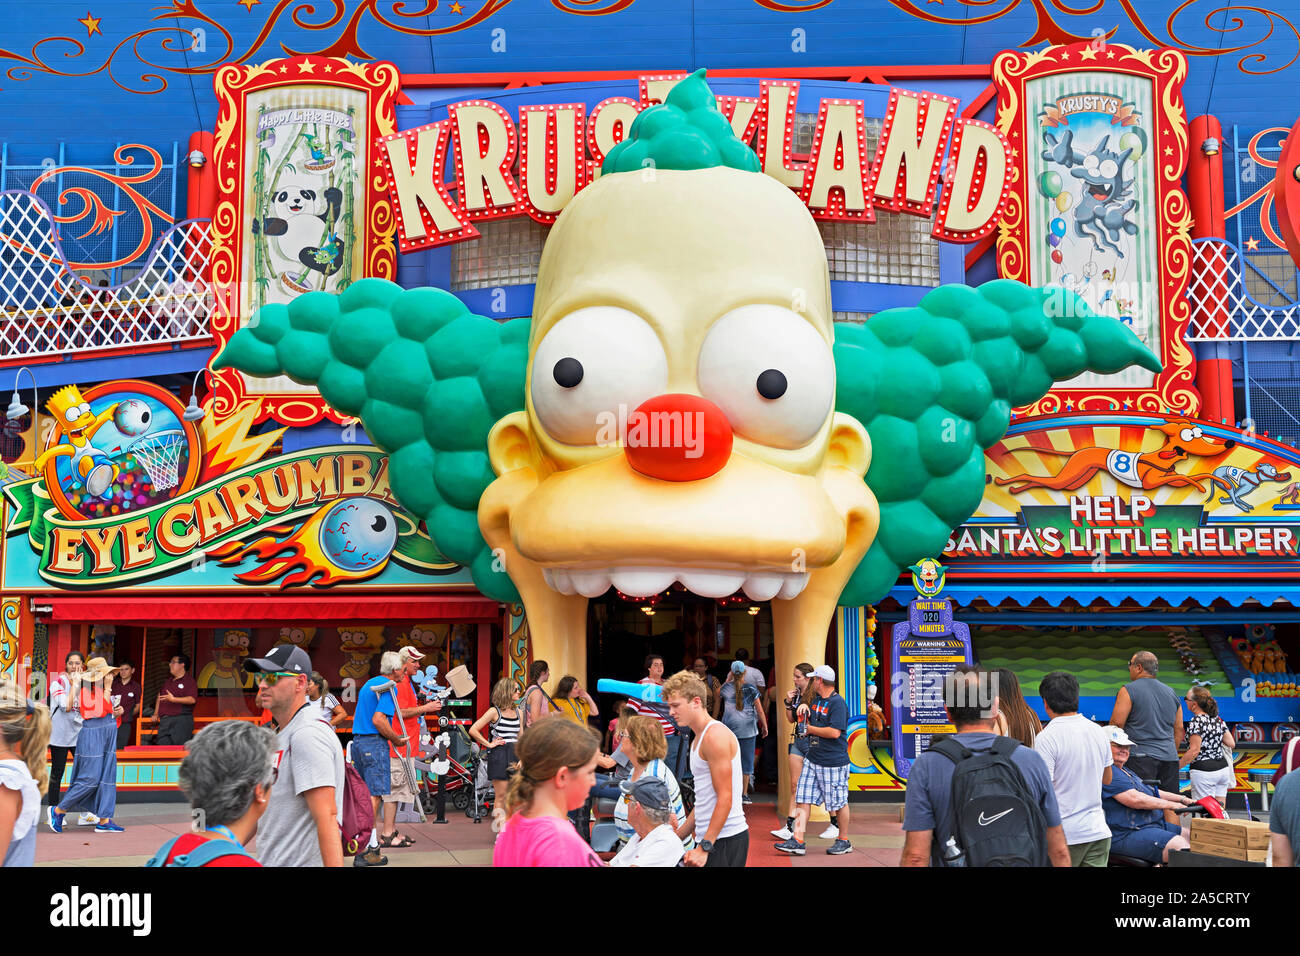 Krustyland Ride, The Simpsons Ride at Universal Studios Resort, Orlando, Florida, USA Stock Photo